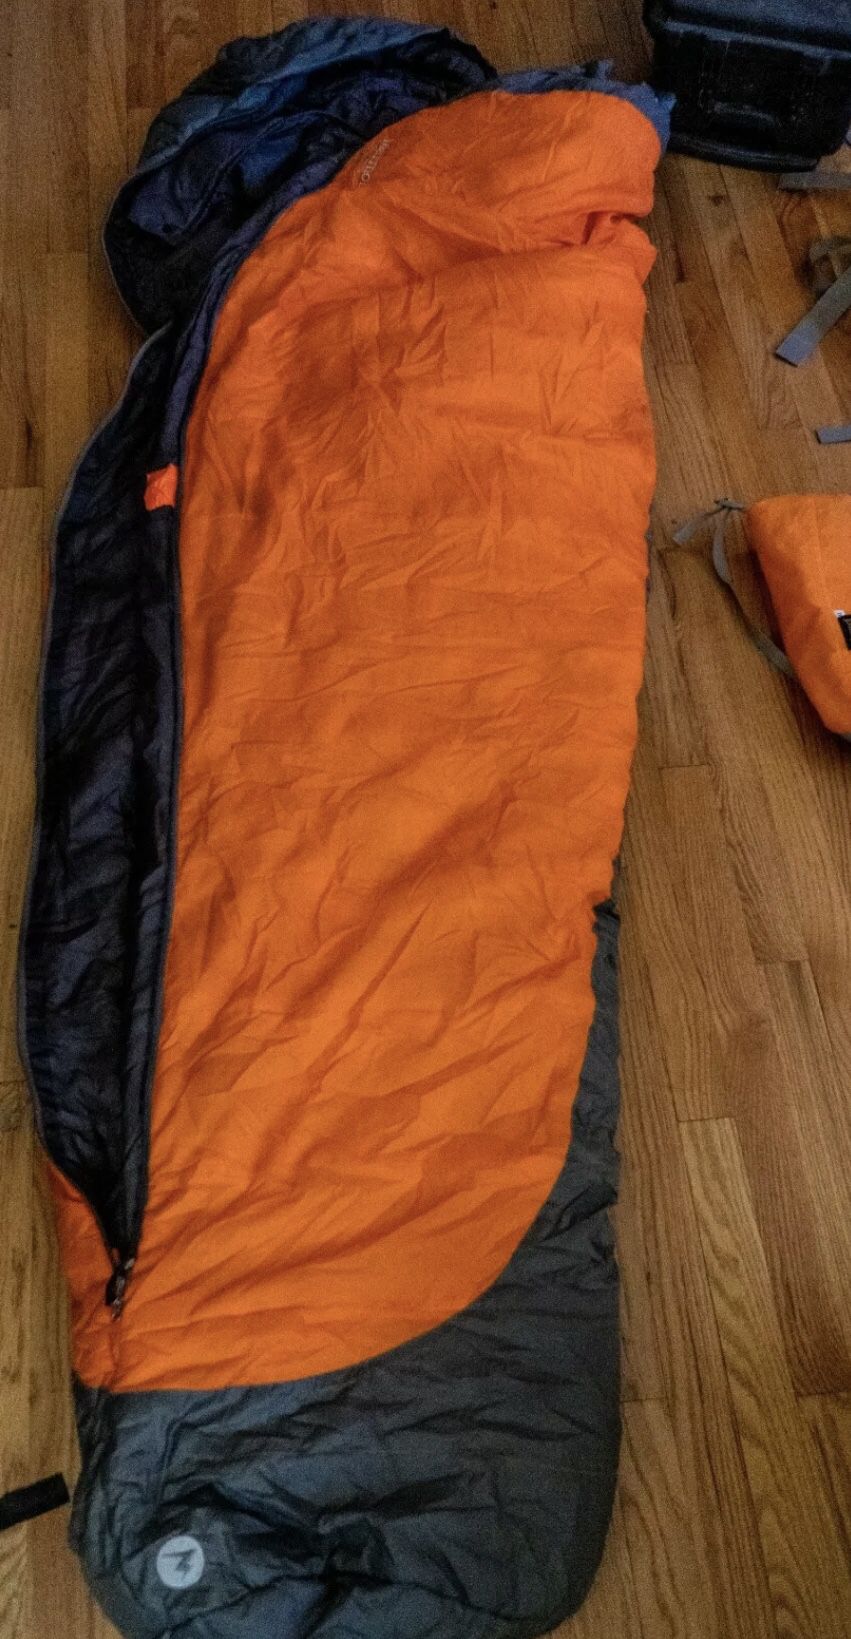 Marmot Trestles 0 degrees synthetic sleeping bag (long)